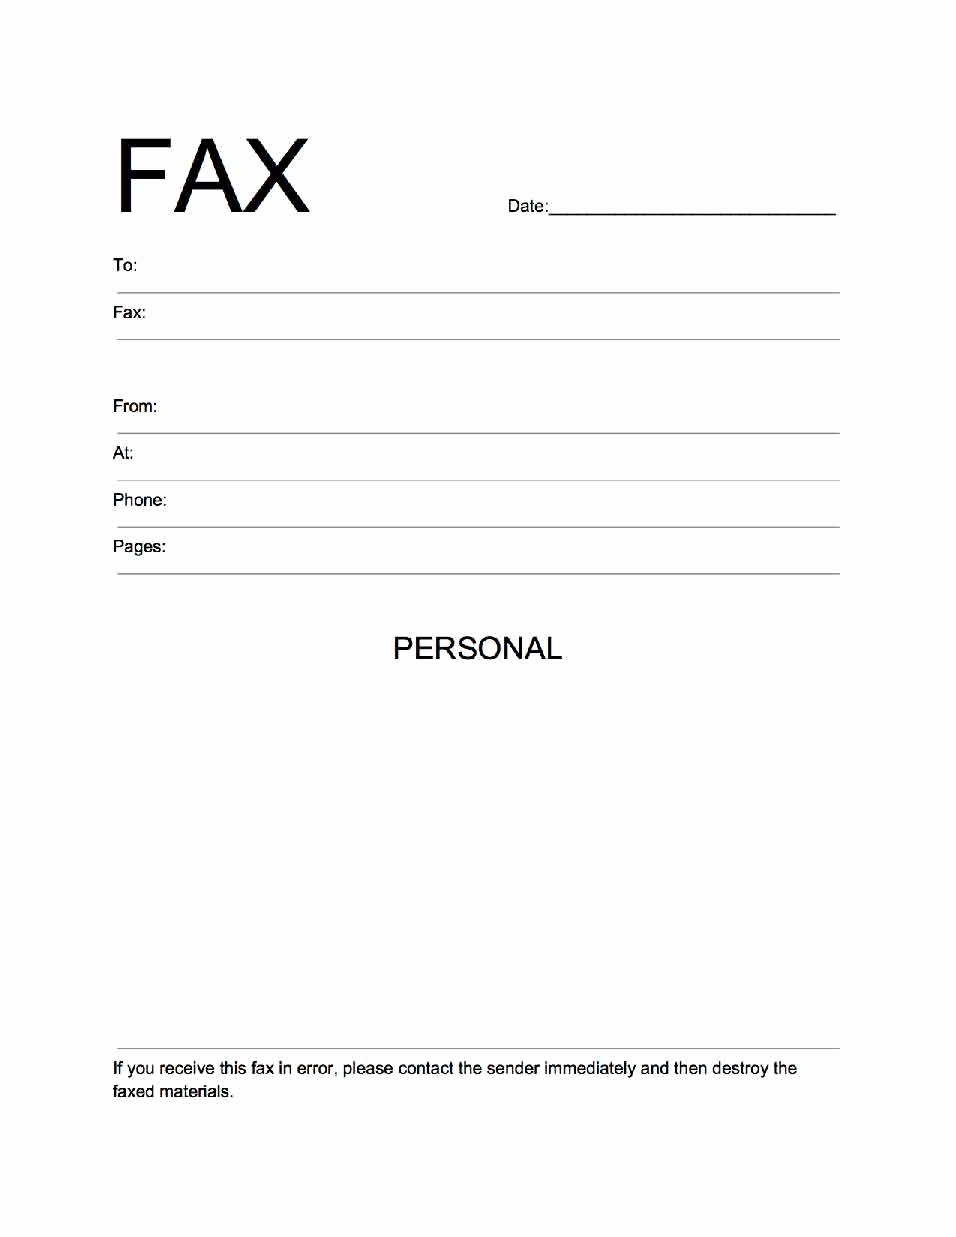 Fax Cover Sheet Download Free Beautiful Free Fax Cover Sheet Template Download